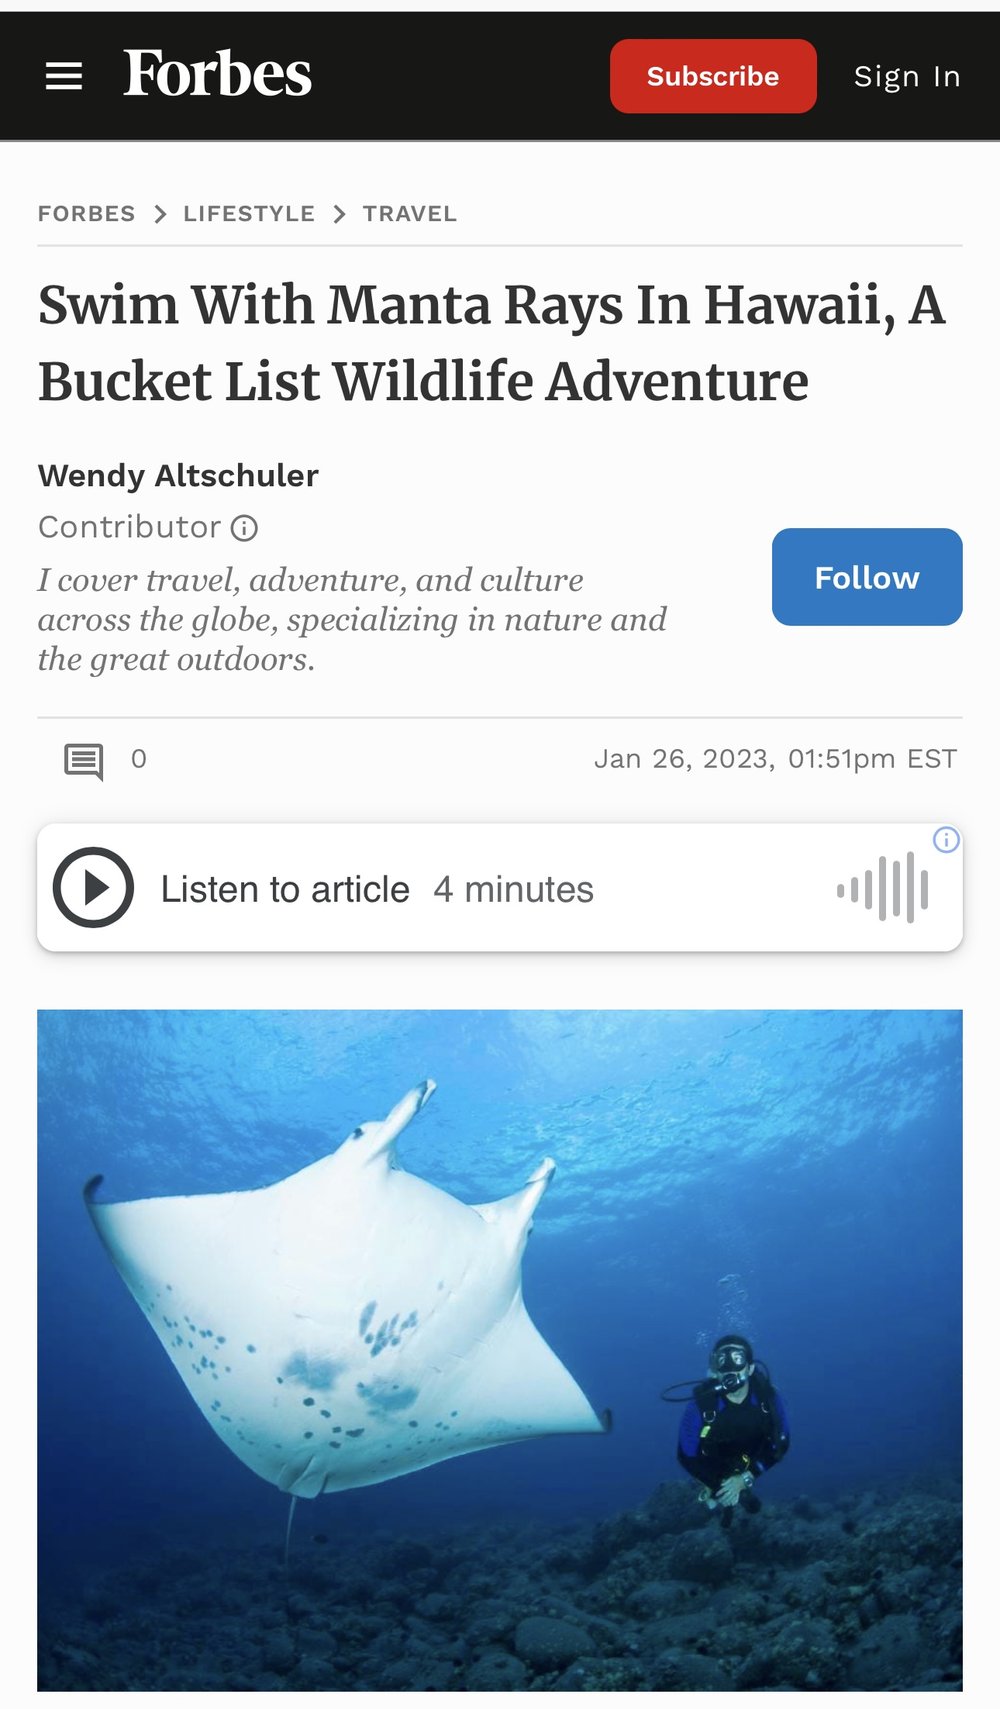 Swim with Manta Rays in Hawaii, a Bucket List Wildlife Adventure